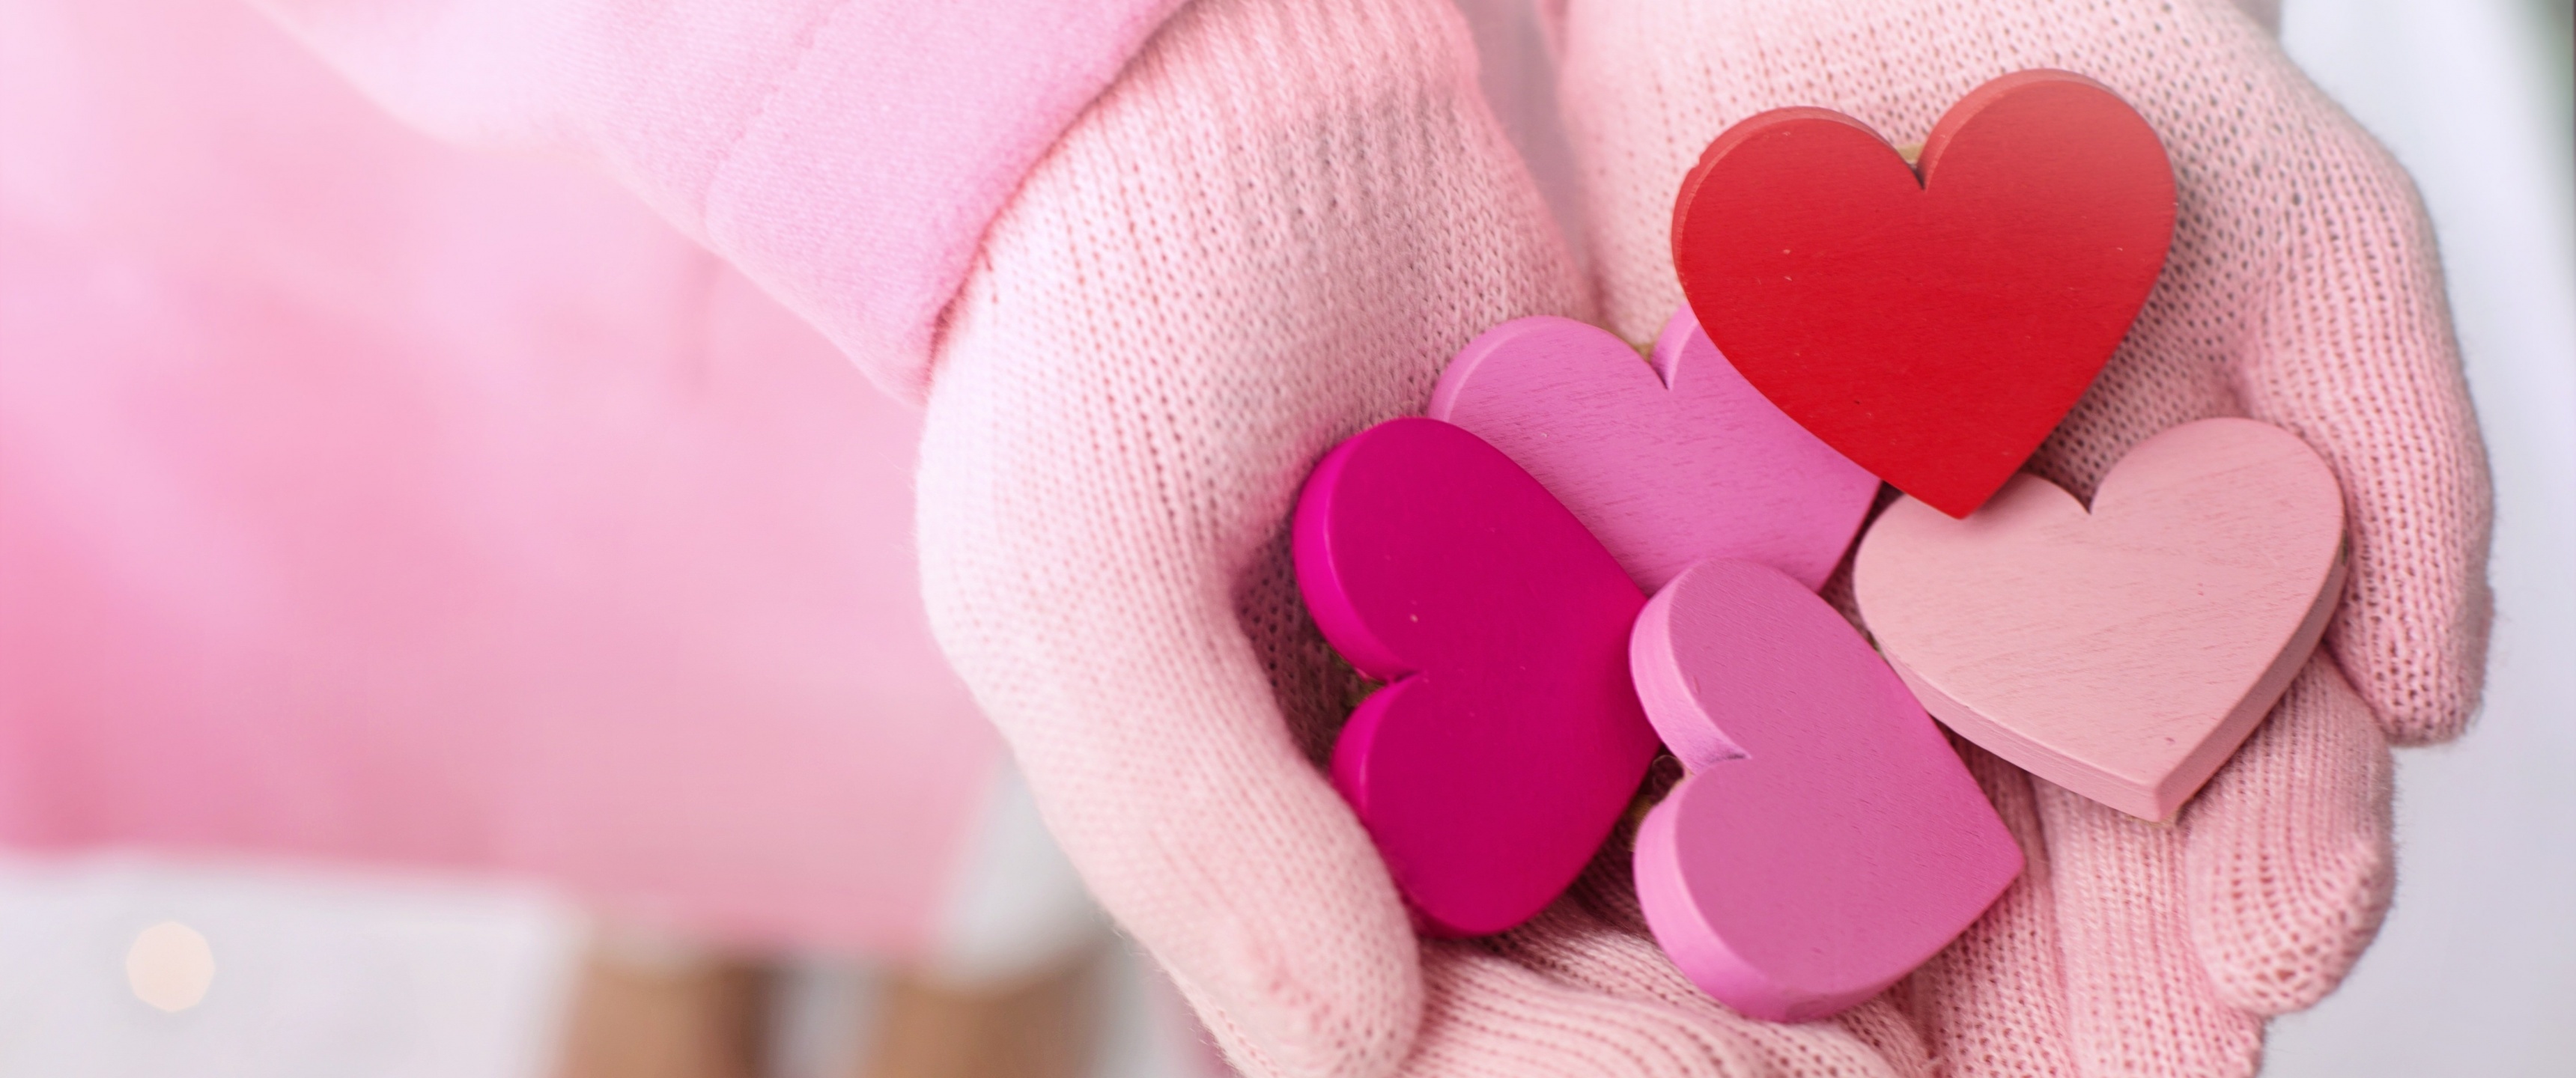 Hearts, Love, Pink theme, Beautiful hand gloves, 3440x1440 Dual Screen Desktop